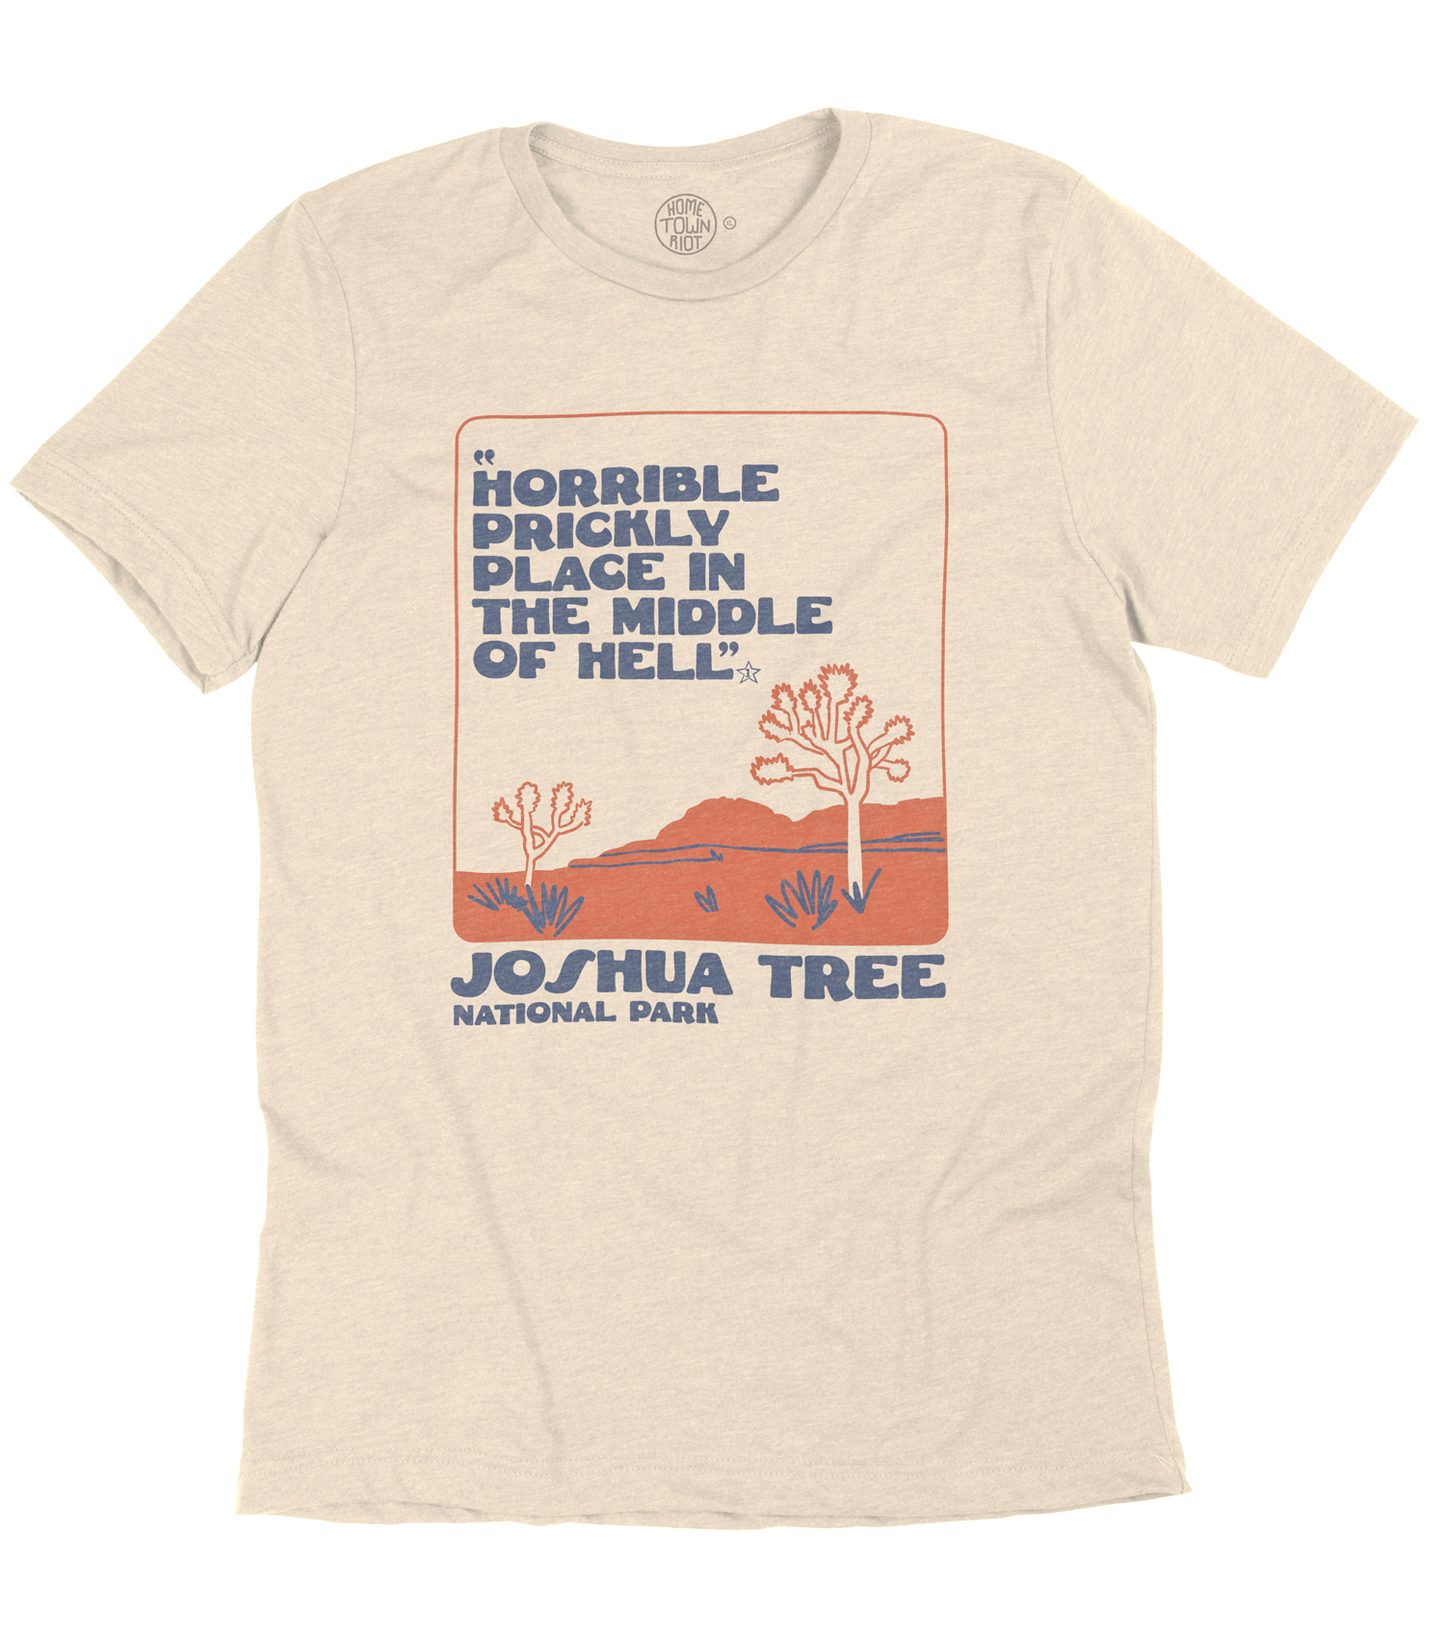 Joshua Tree National Park 1 Star Review Shirt